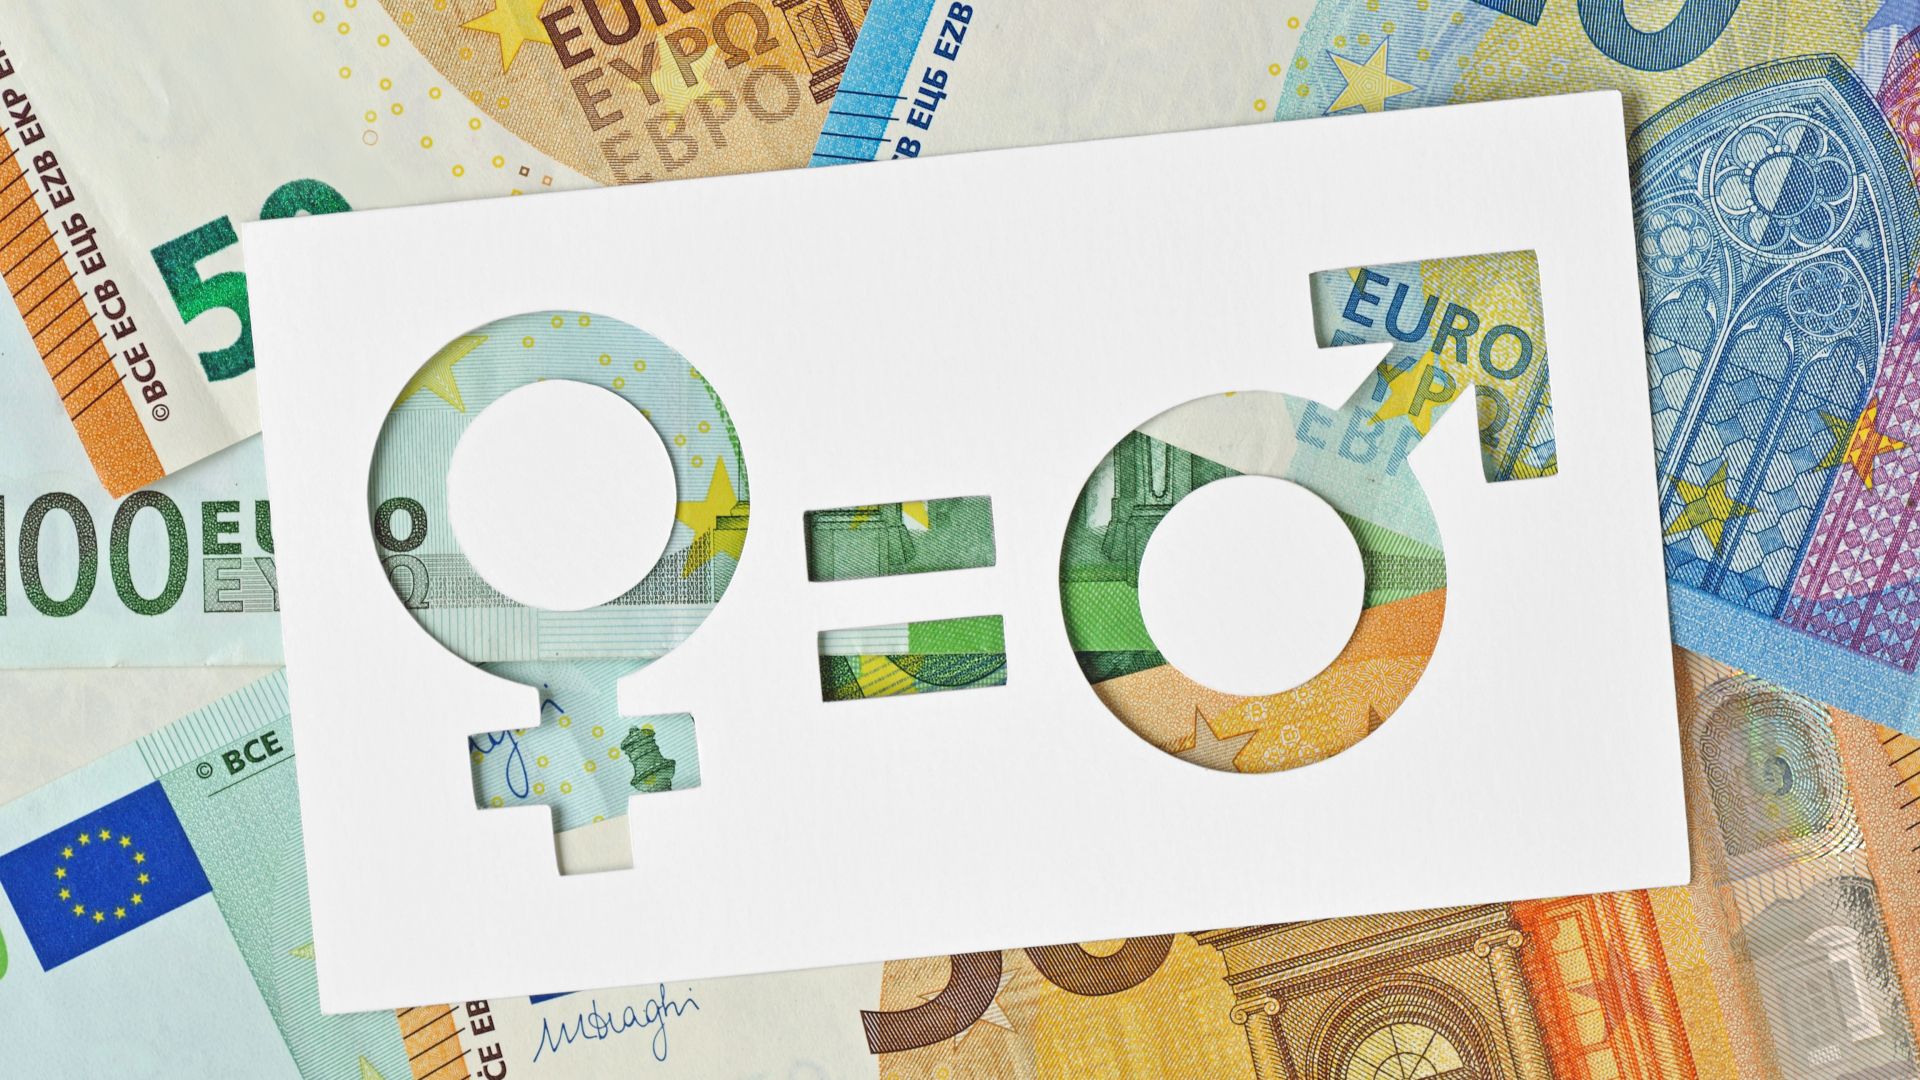 Gender pay gap equal transparency euros